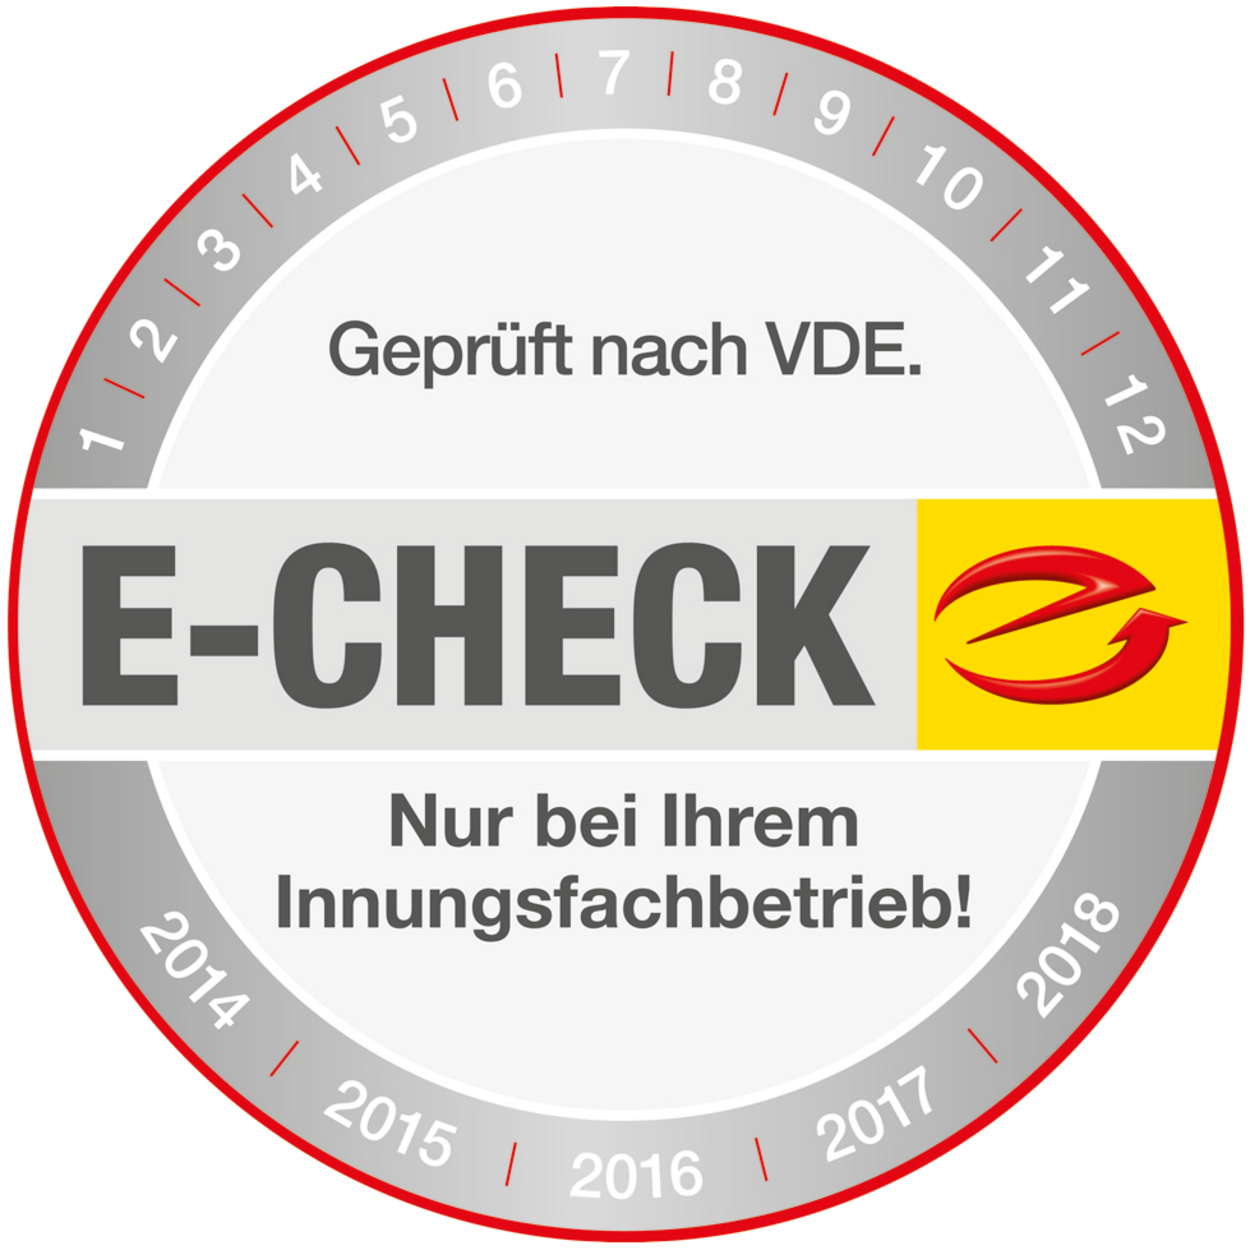 Der E-Check bei Elektro Heinrich Seib GmbH in Hanau